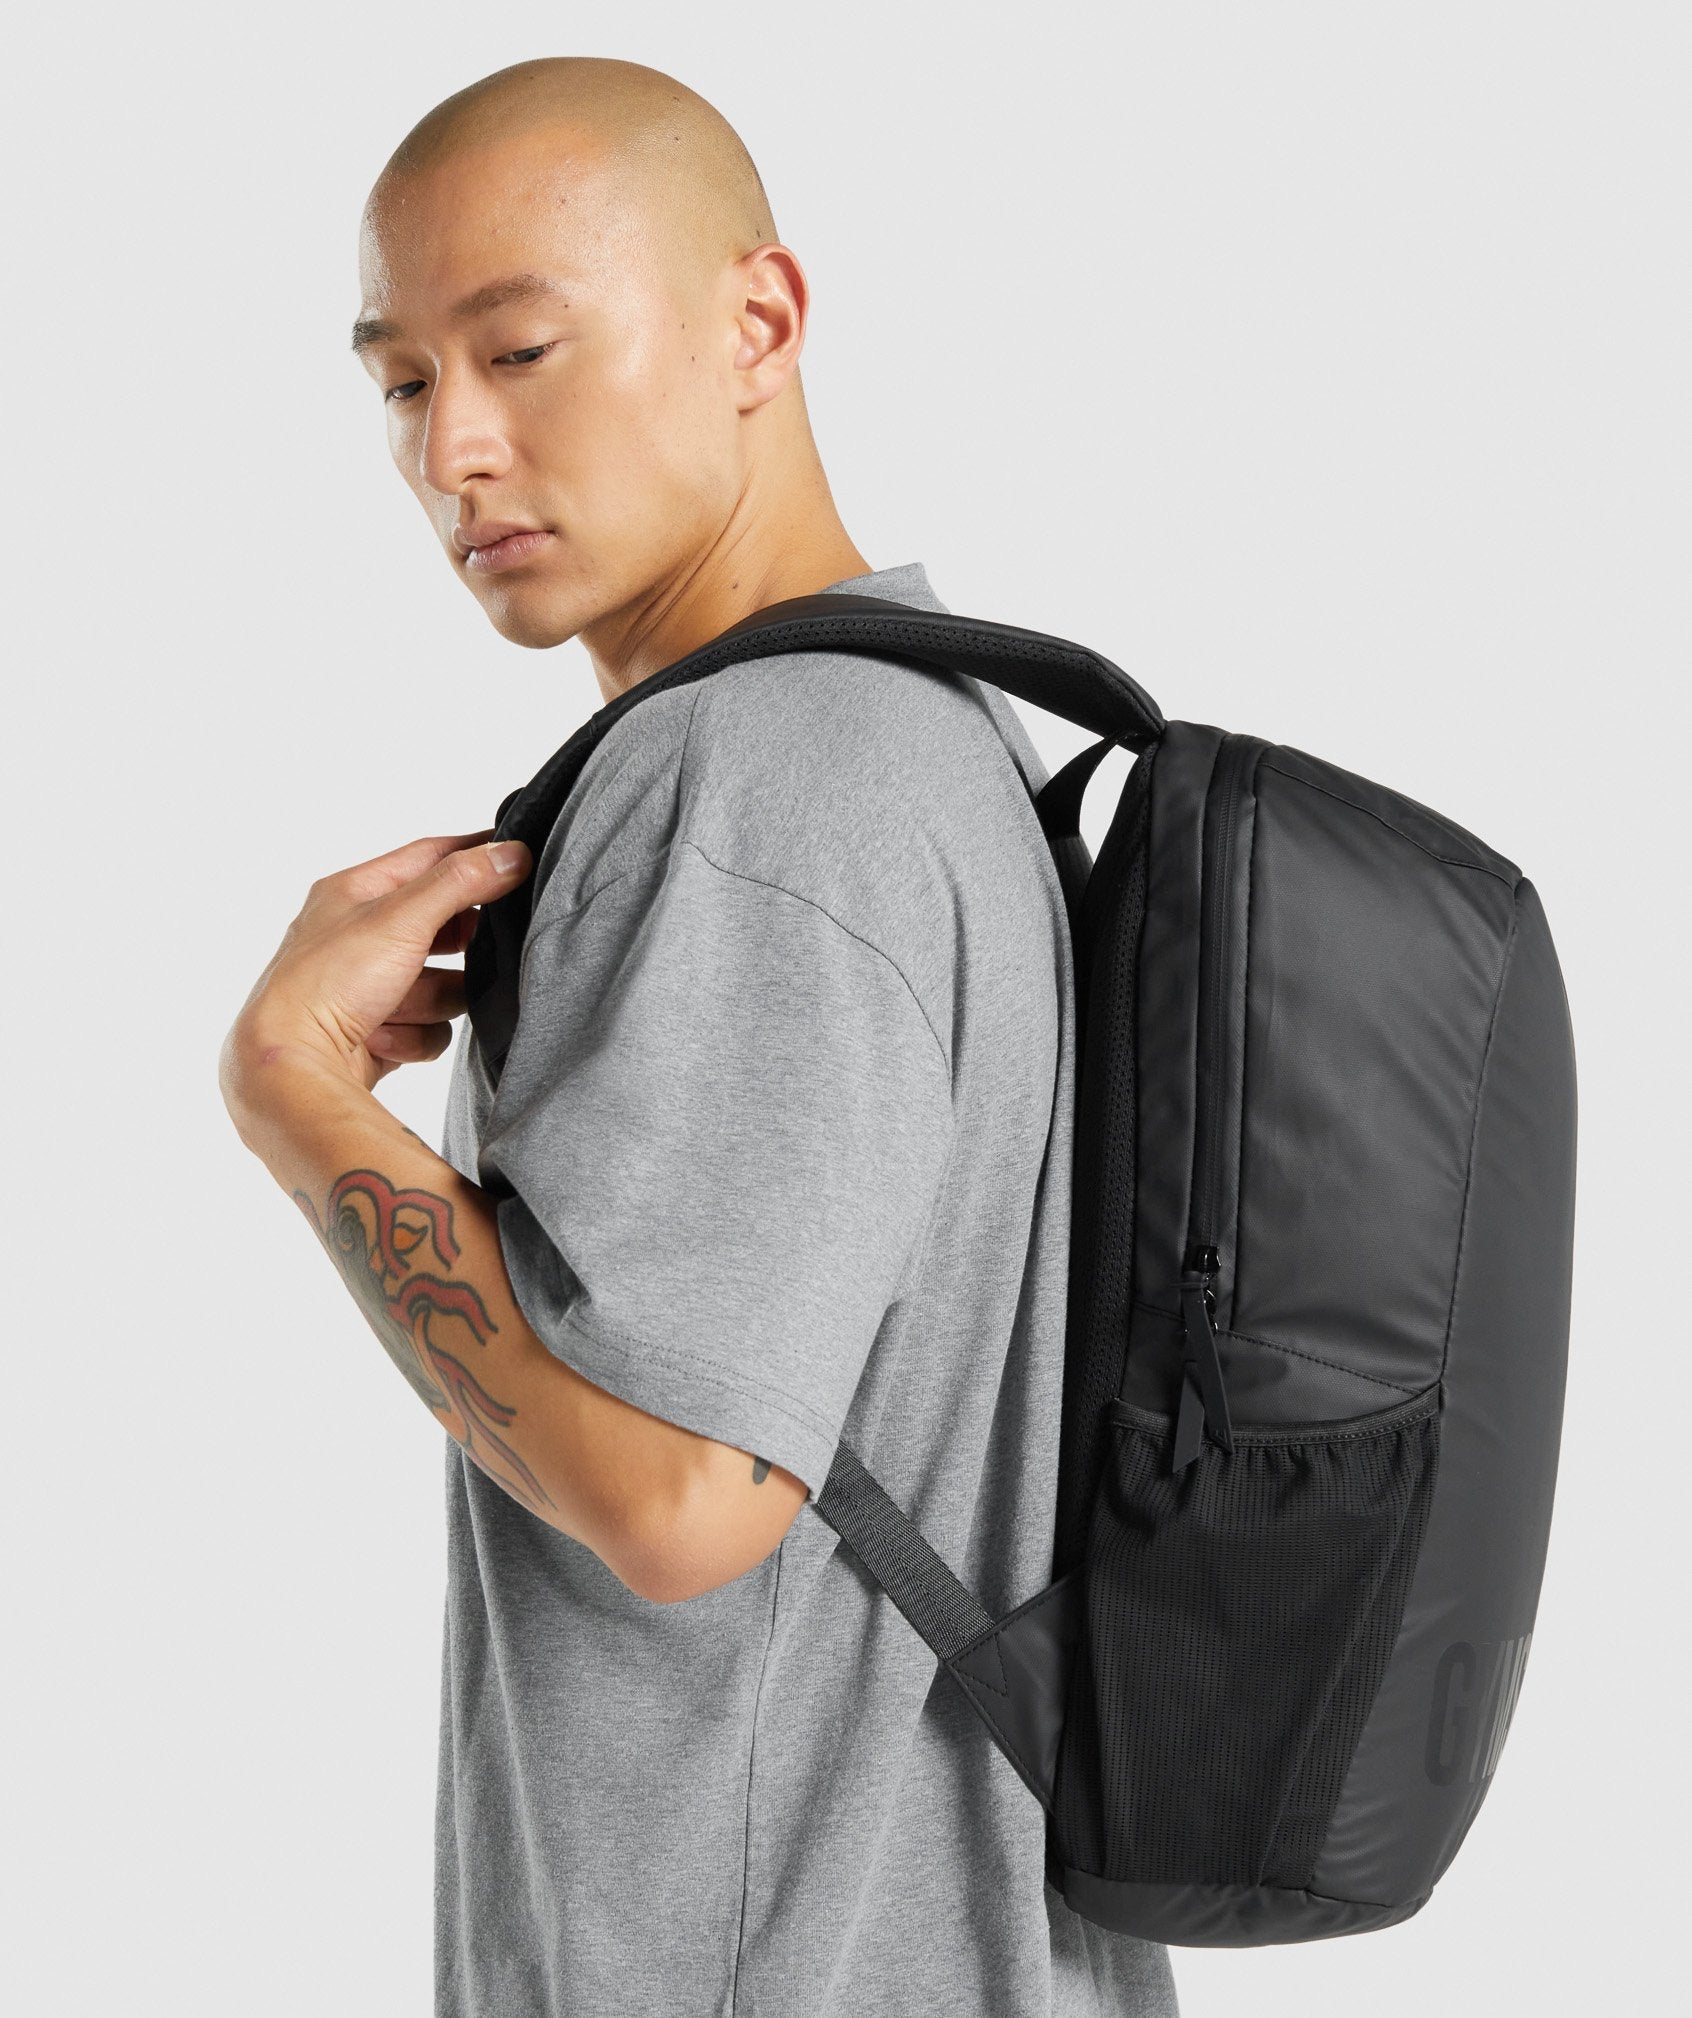 X-Series 0.1 Backpack in Black - view 4